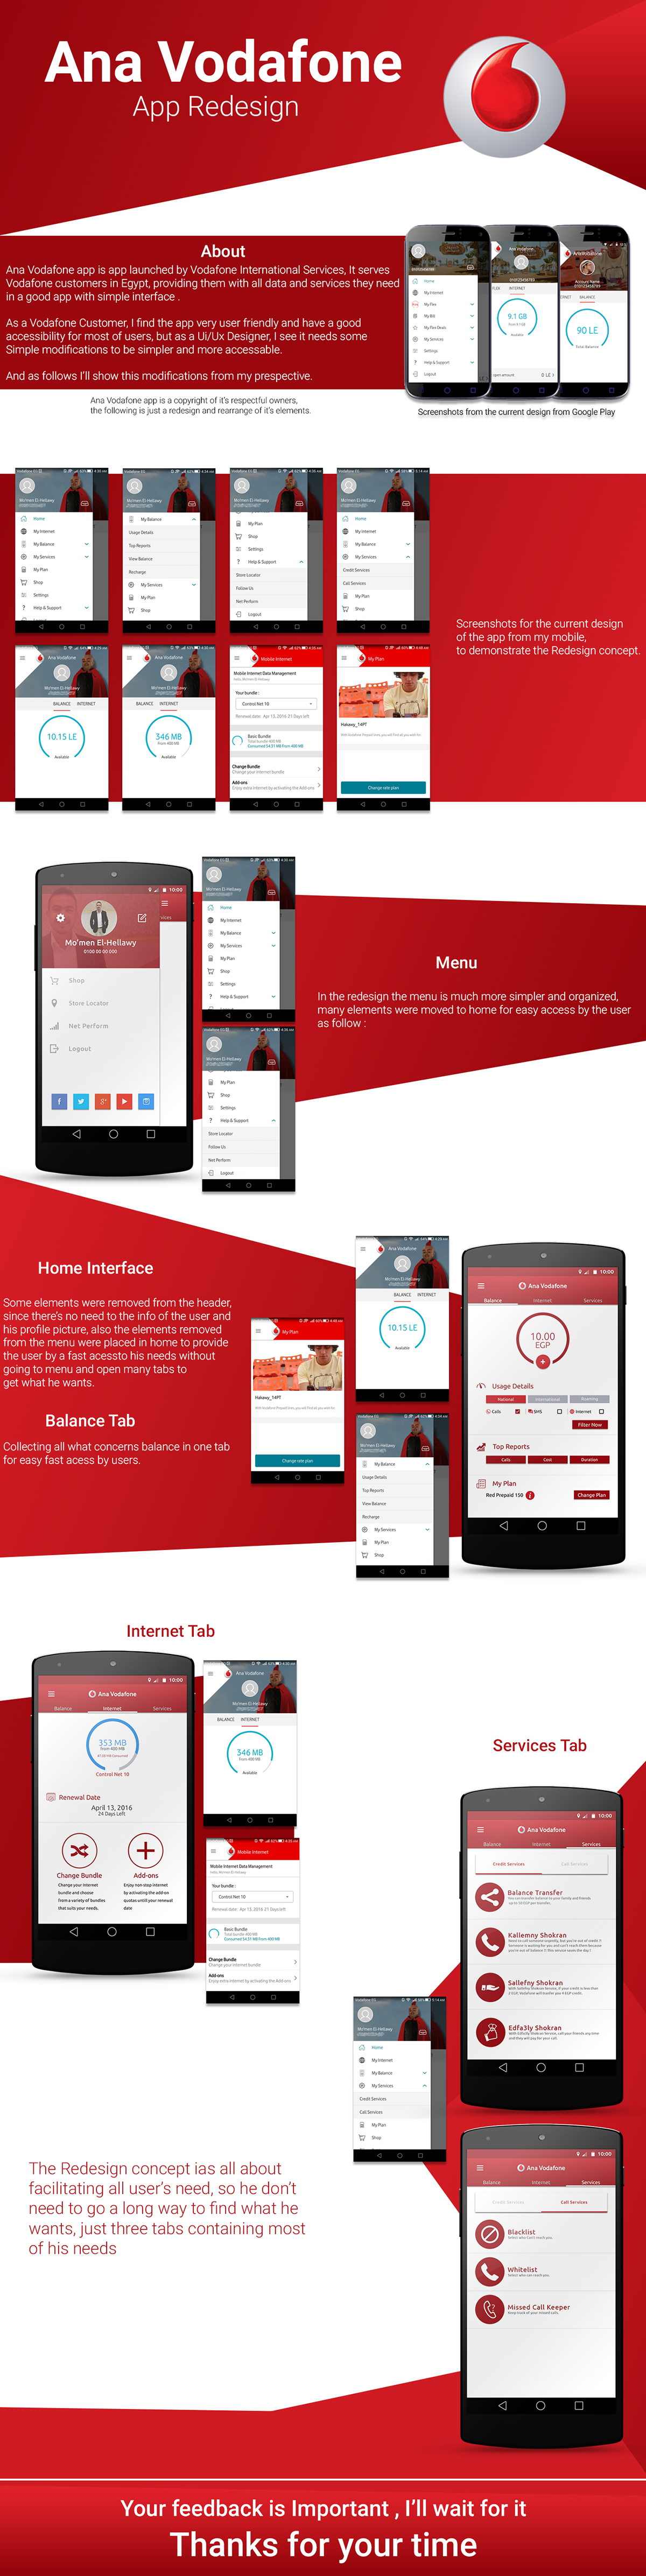 Ana Vodafone vodafone redesign design